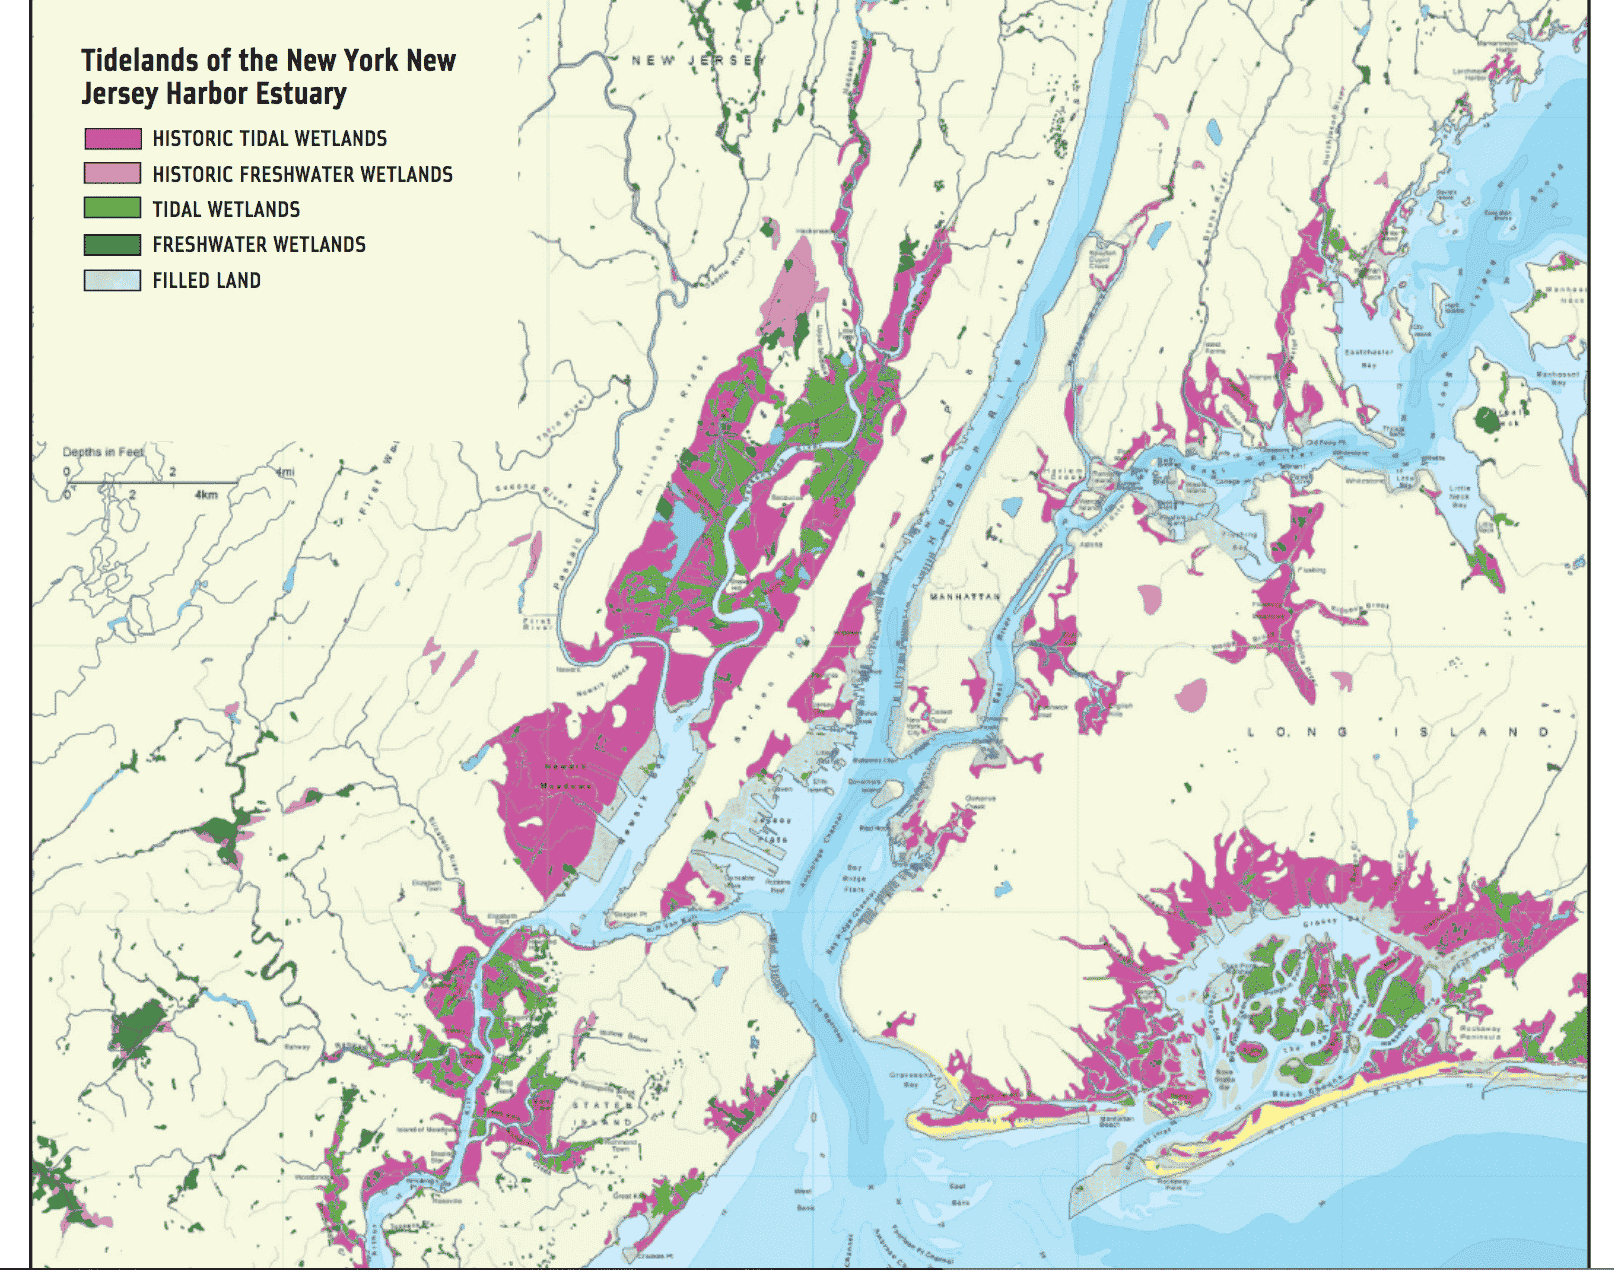 Tidelands of the New York New Jersey Harbor Estuary.